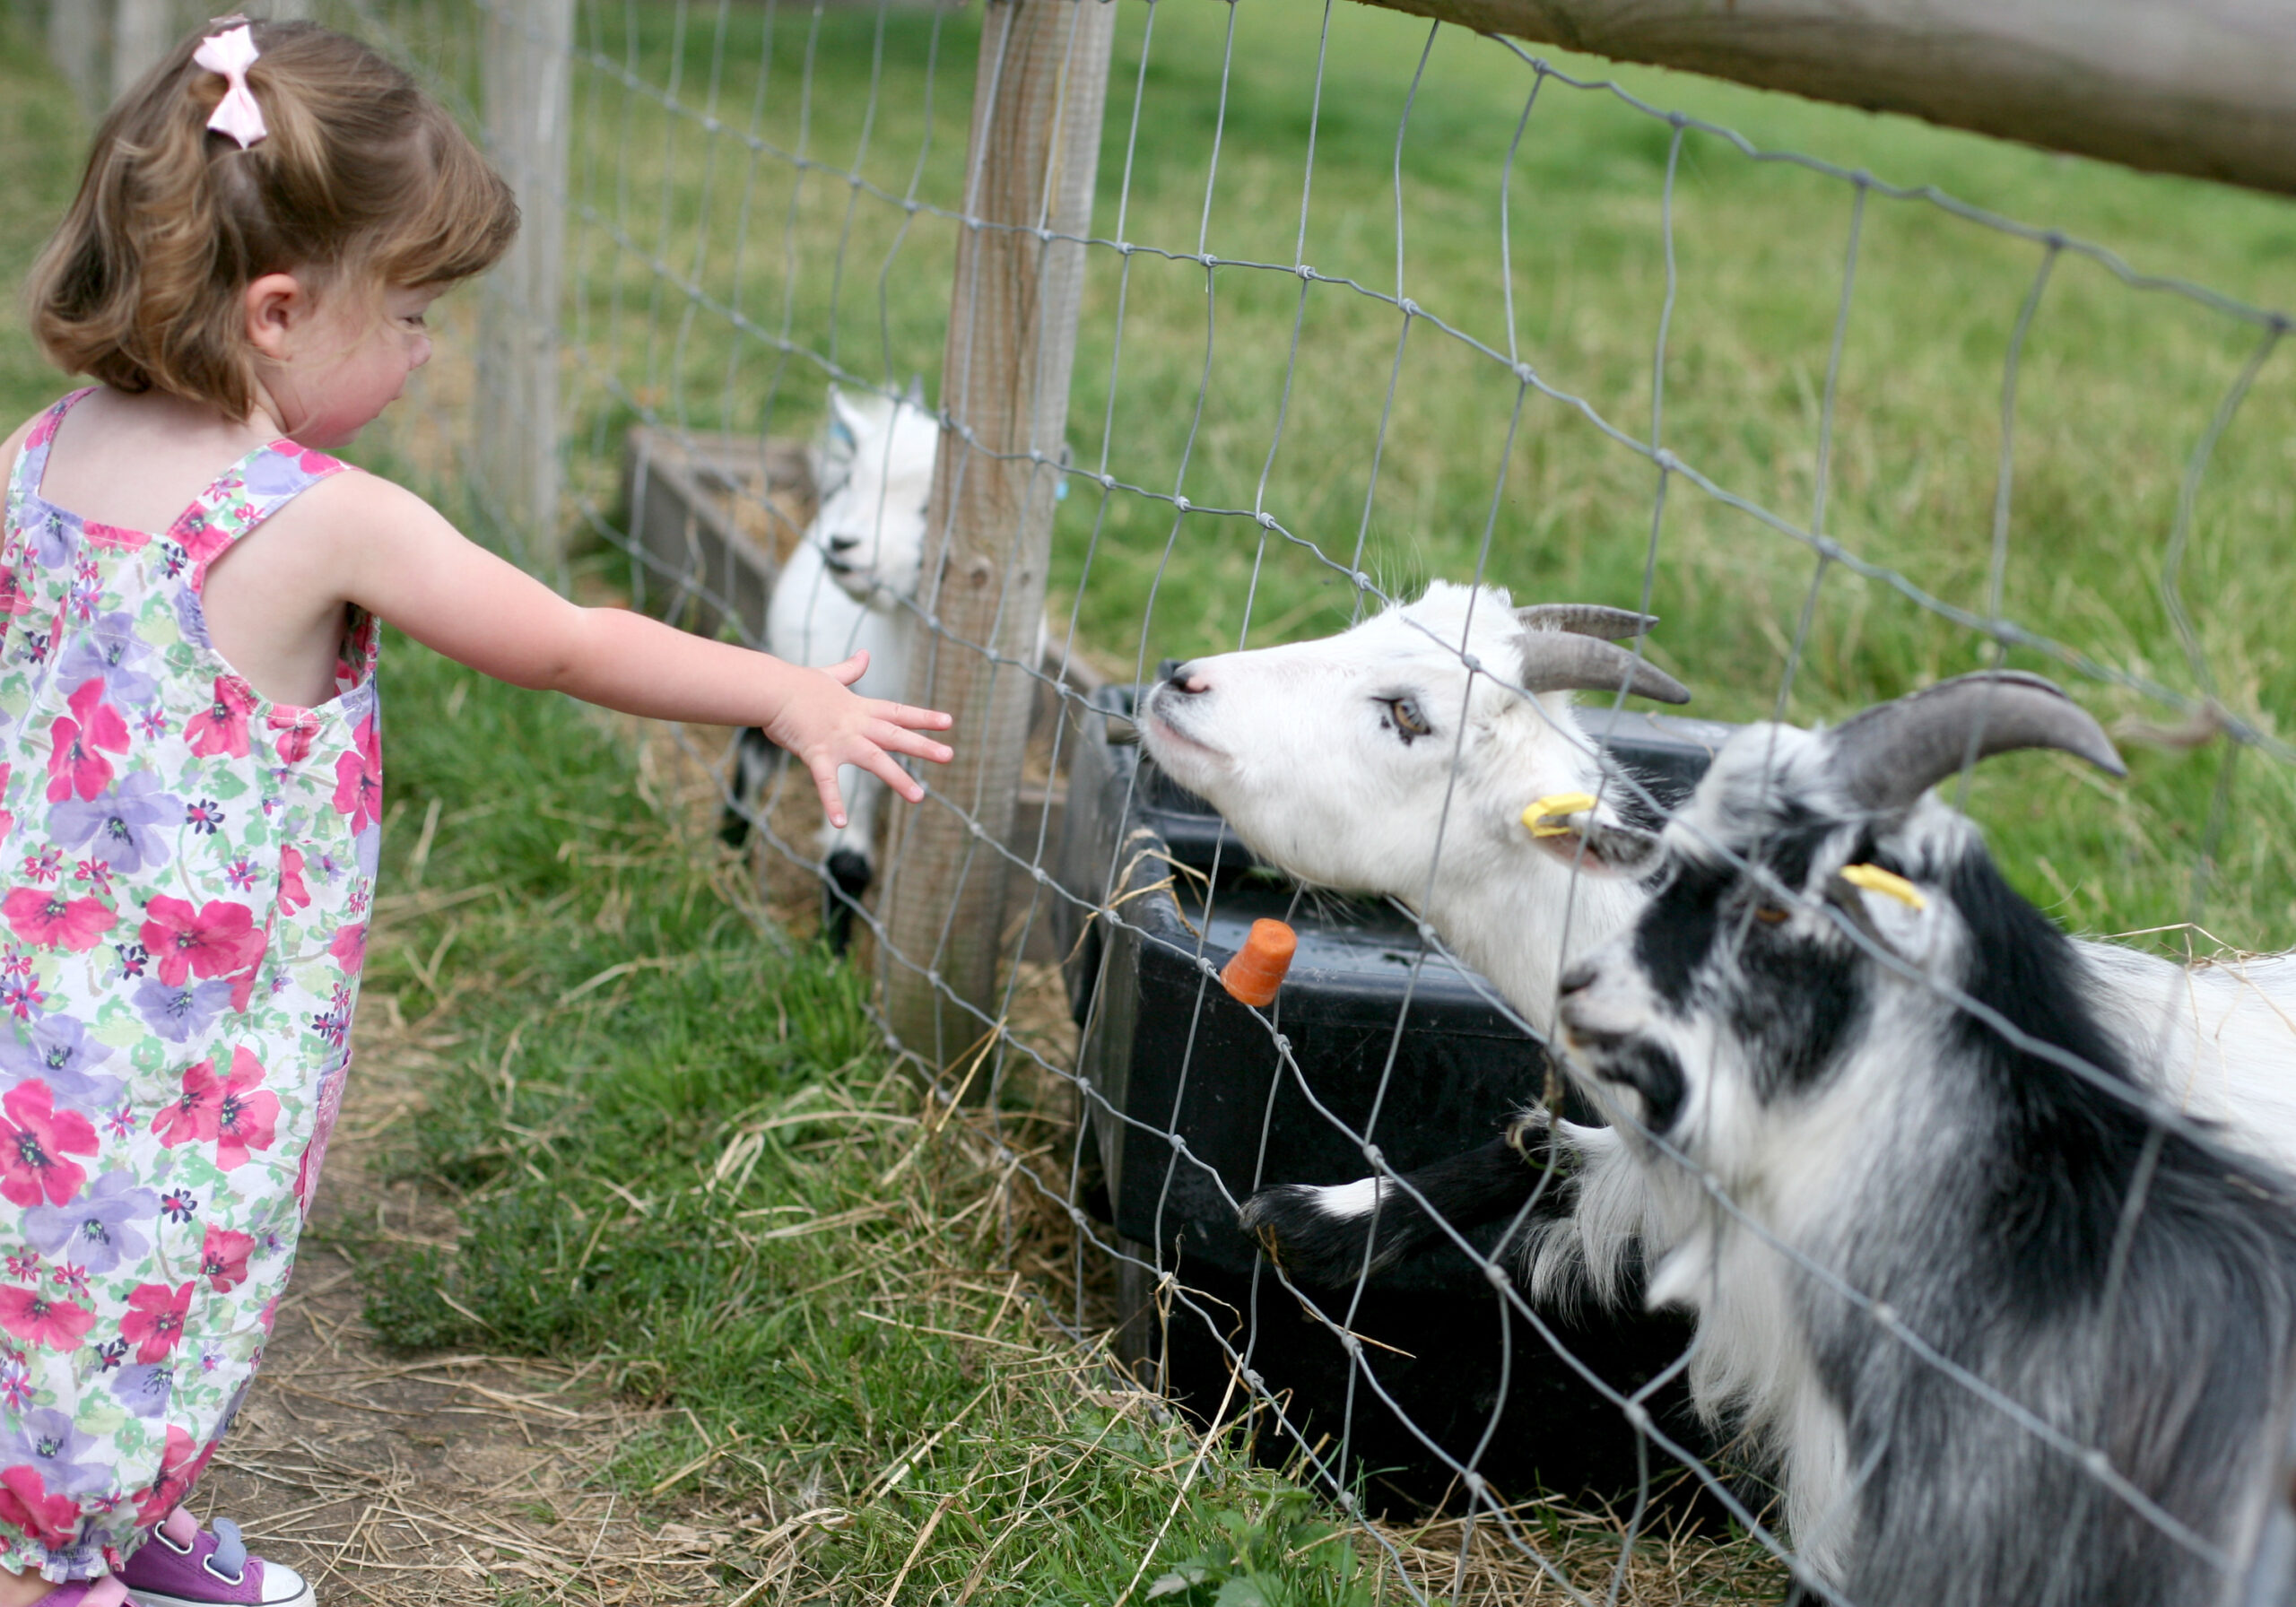 Feeding the goats